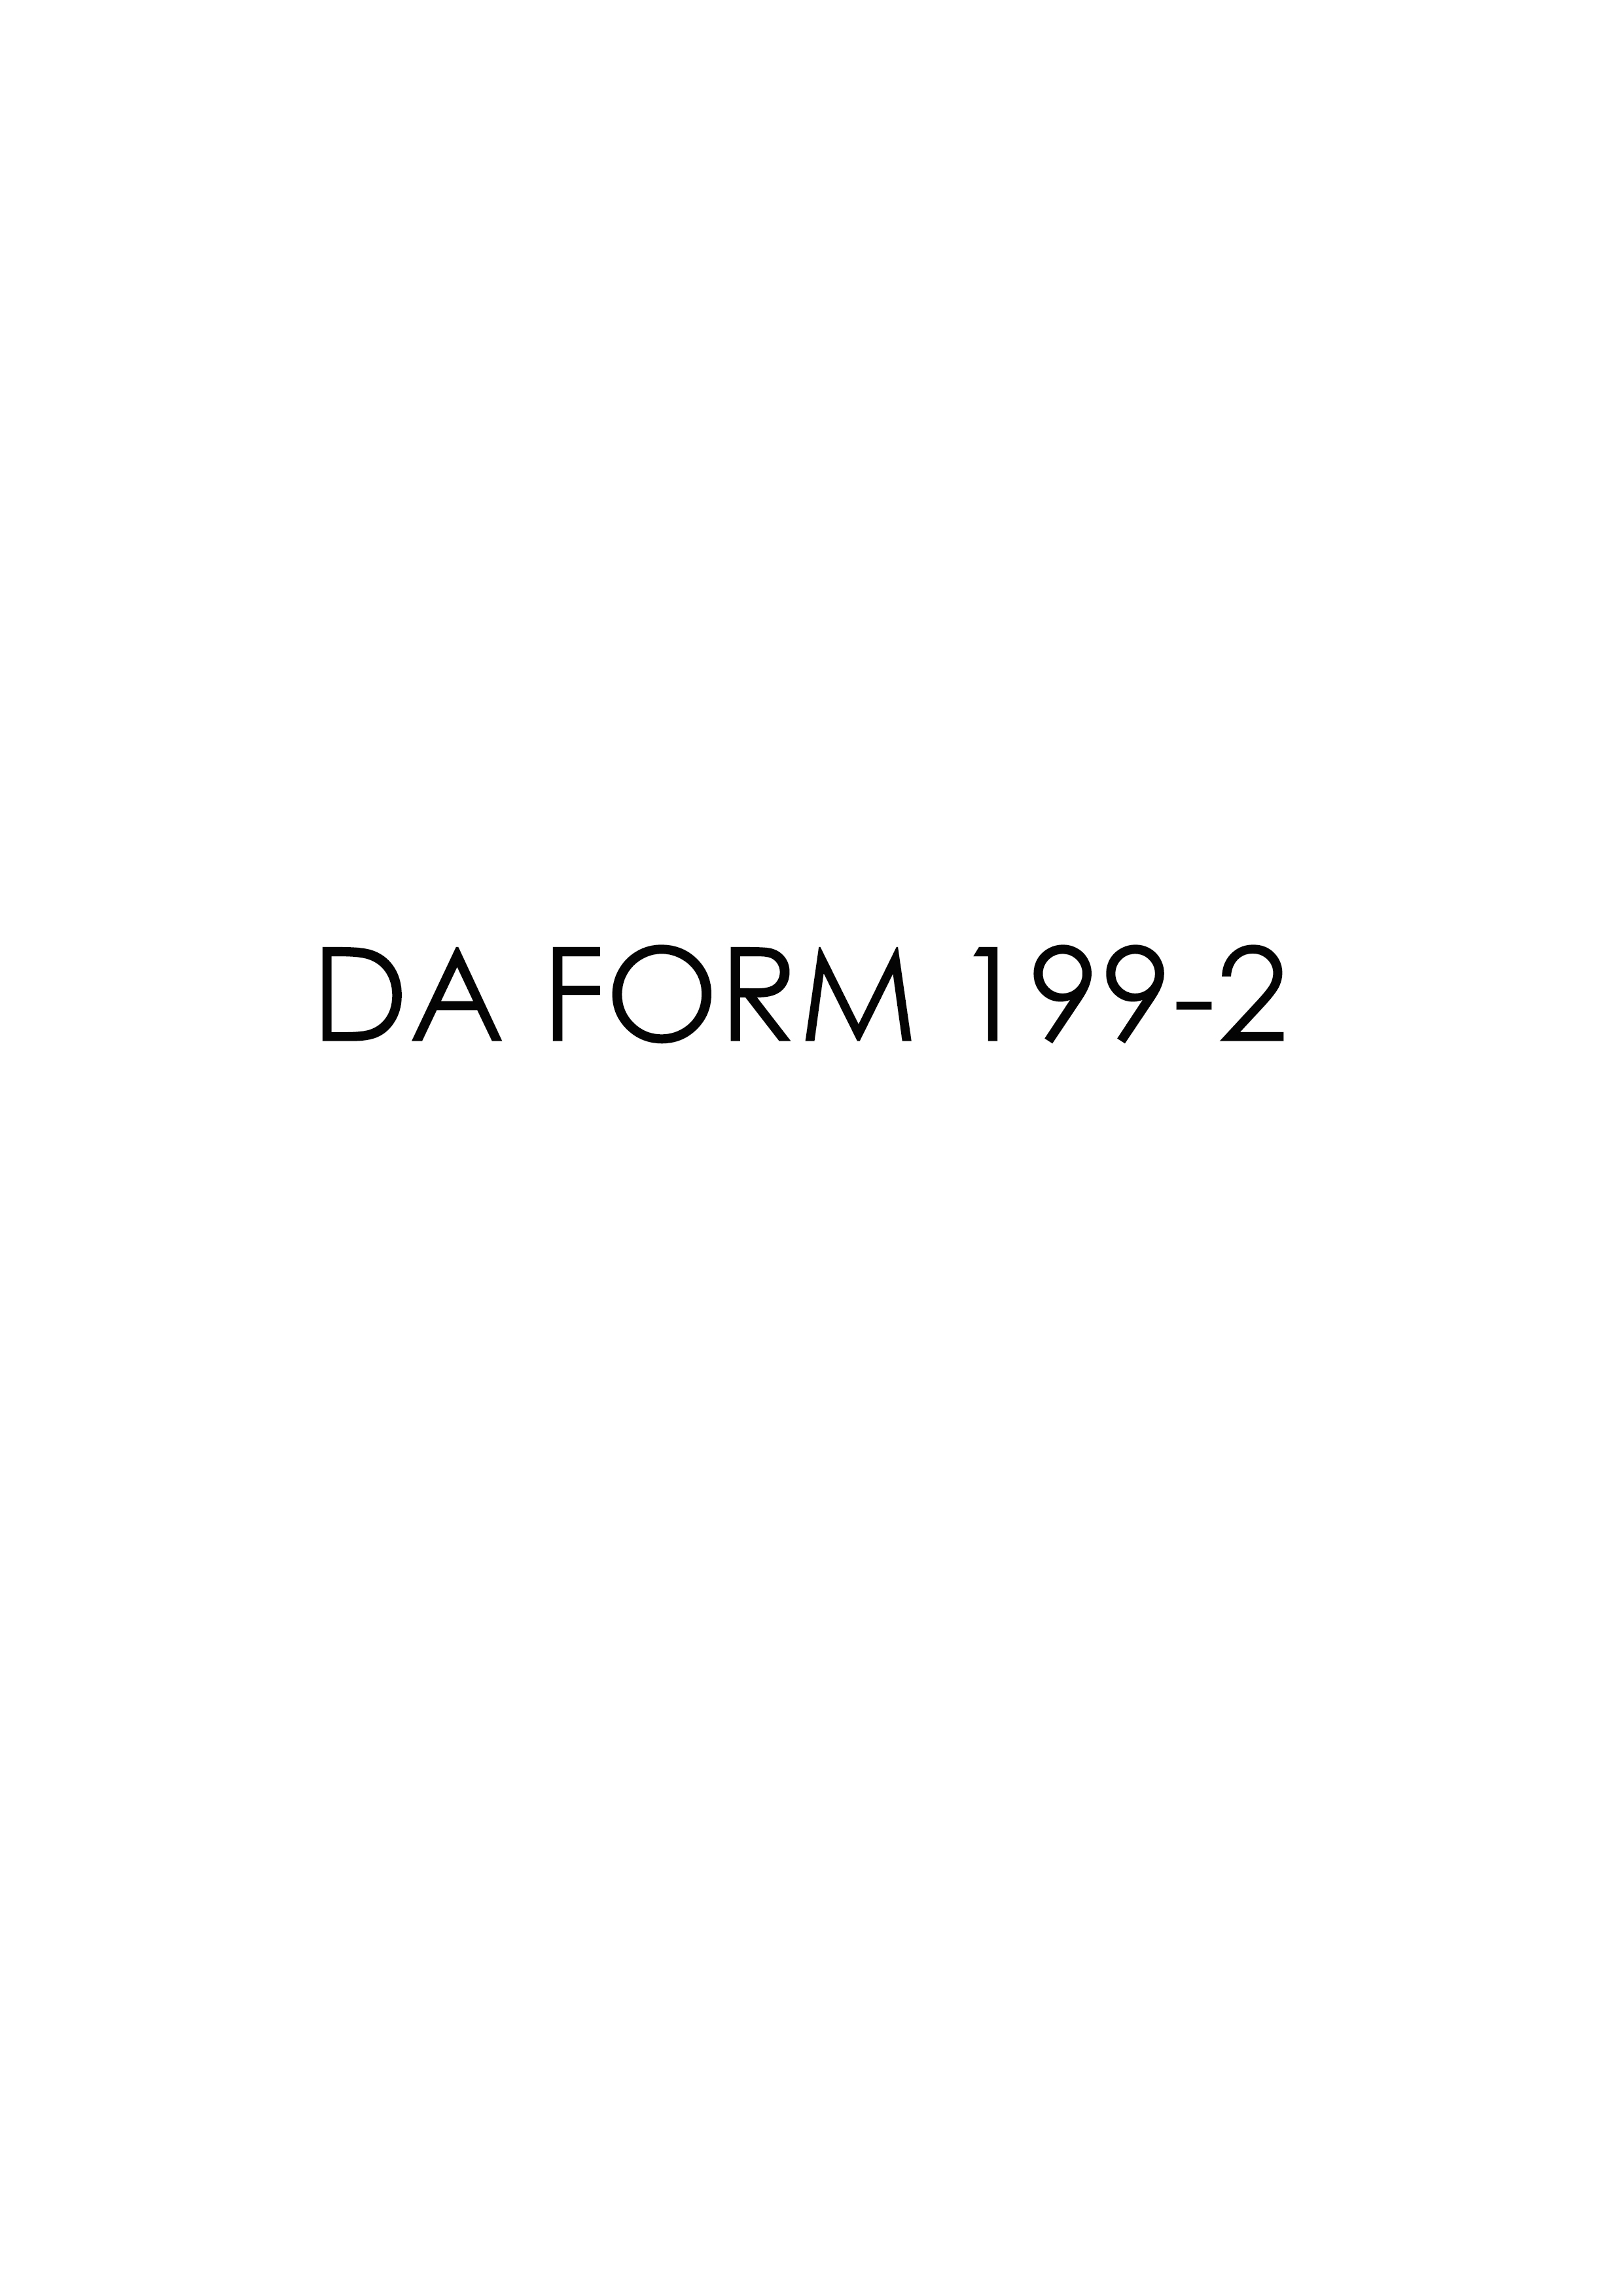 Download da 199-2 Form